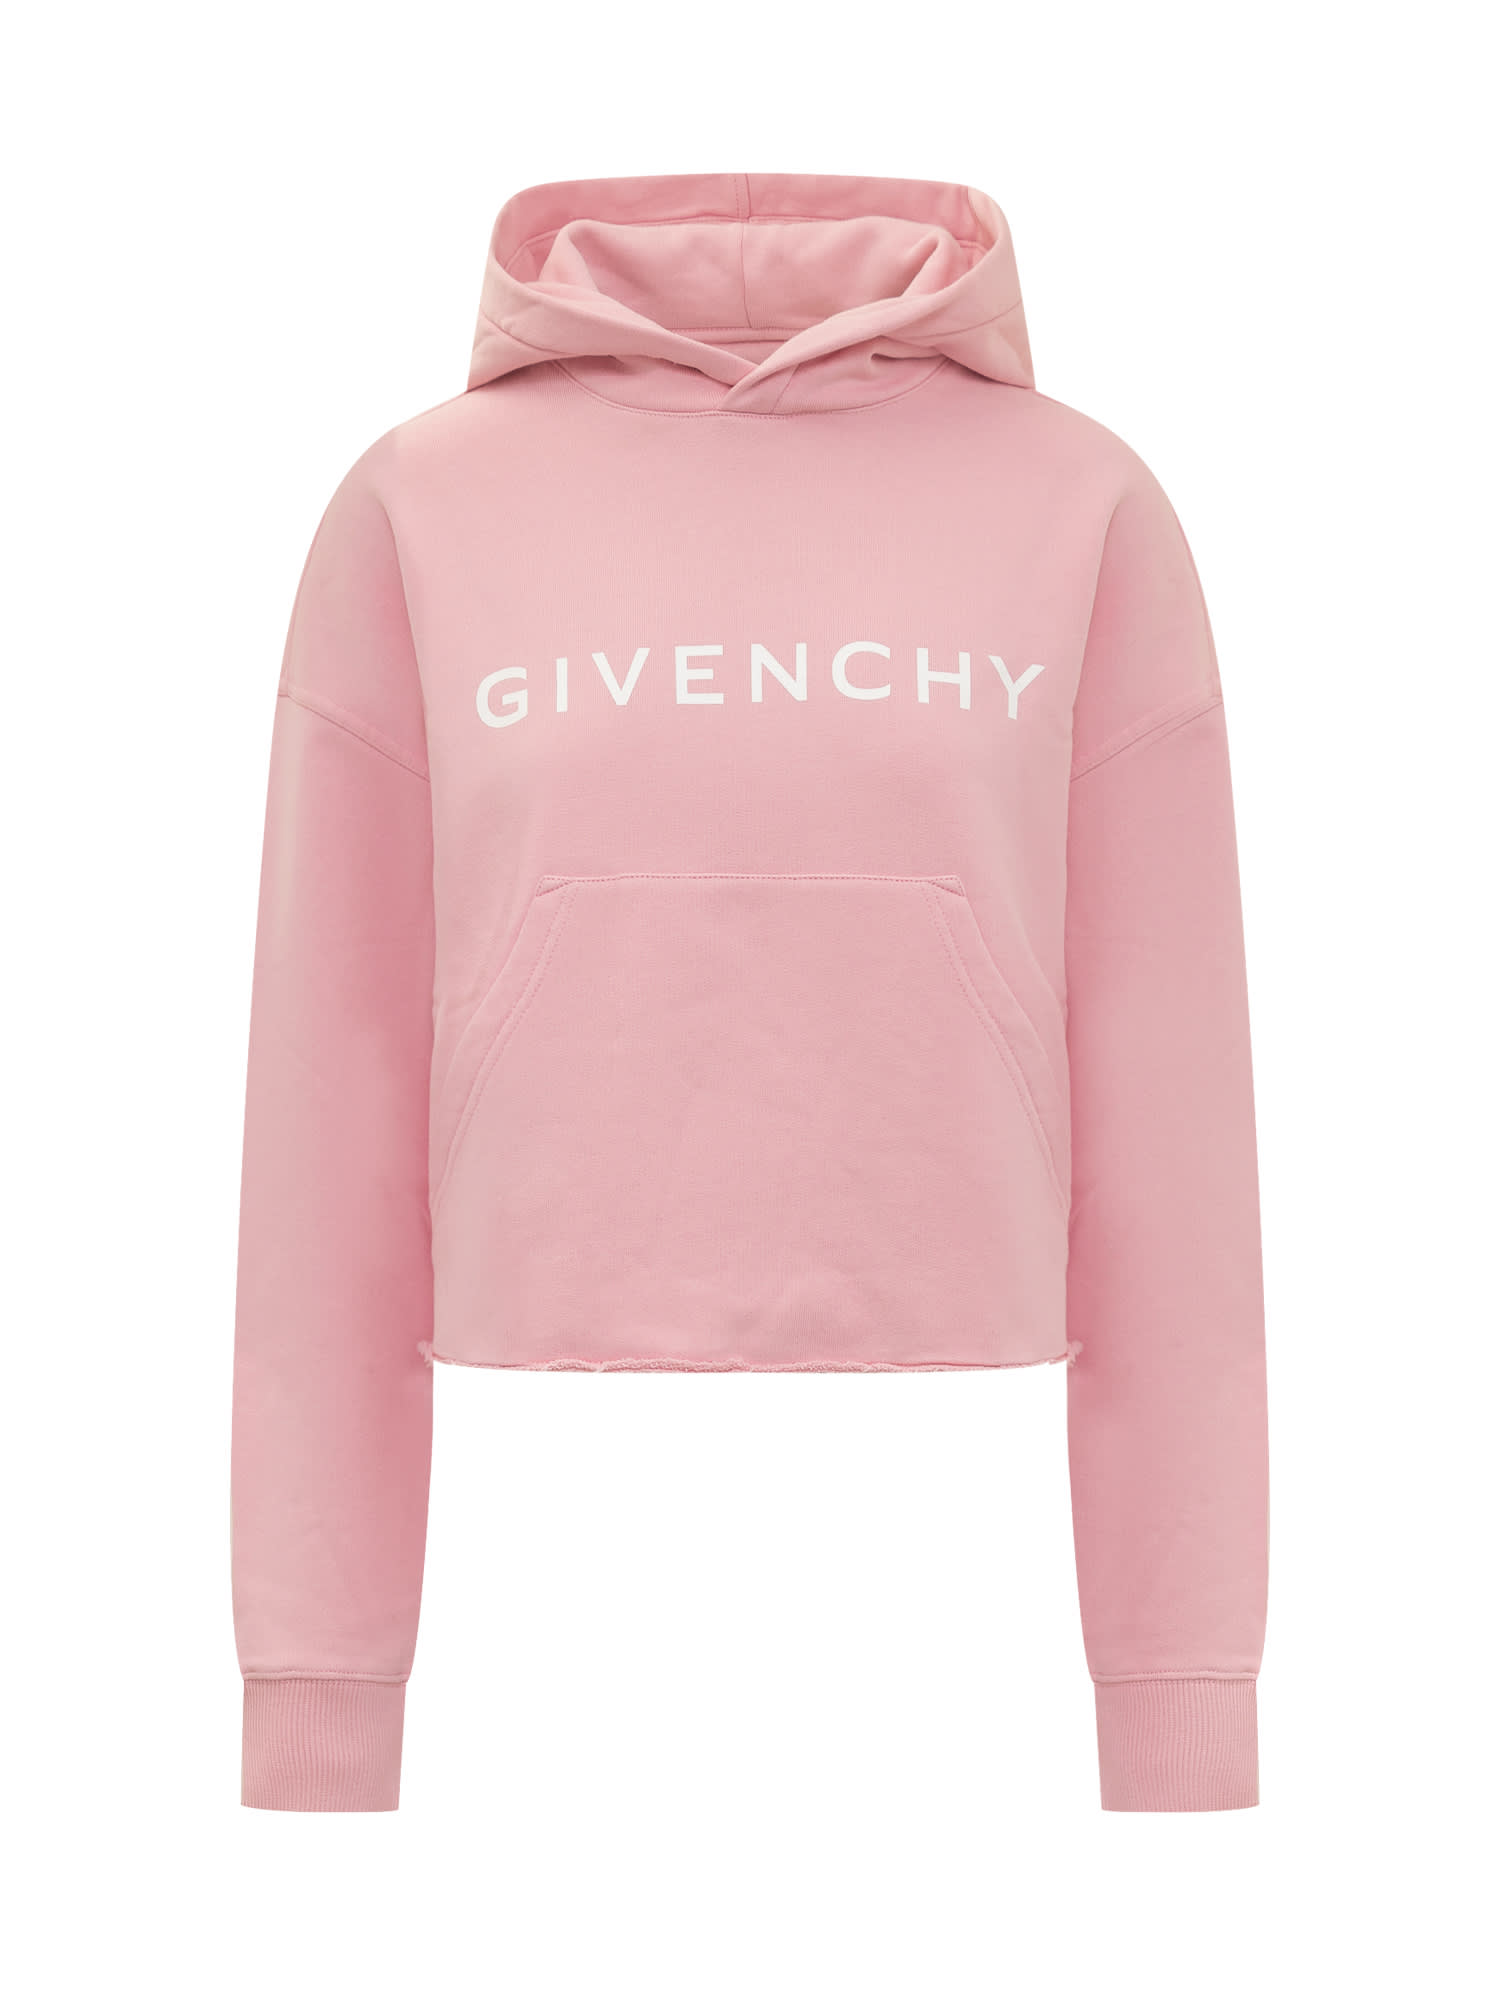 Givenchy Archetype Short Sweatshirt In Gauzed Fabric In Flamingo